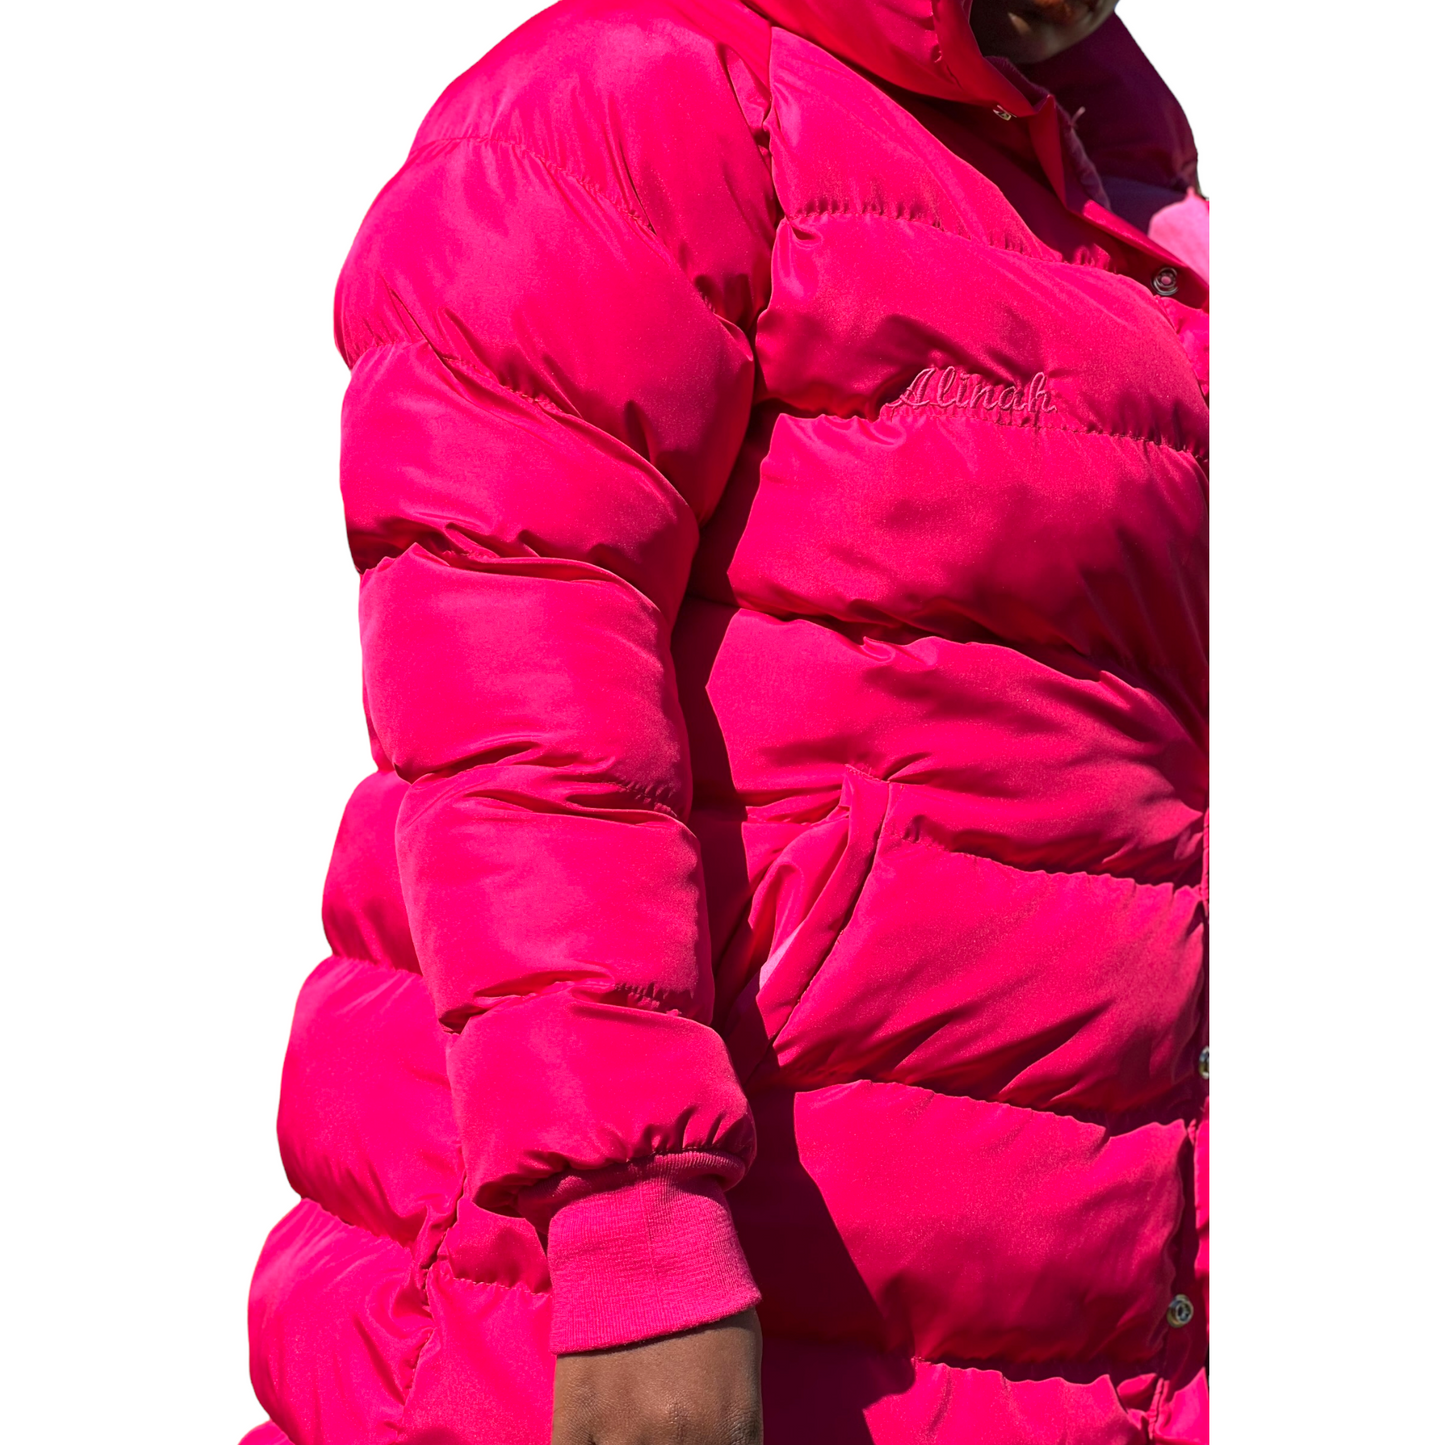 Warm winter puffer jacket